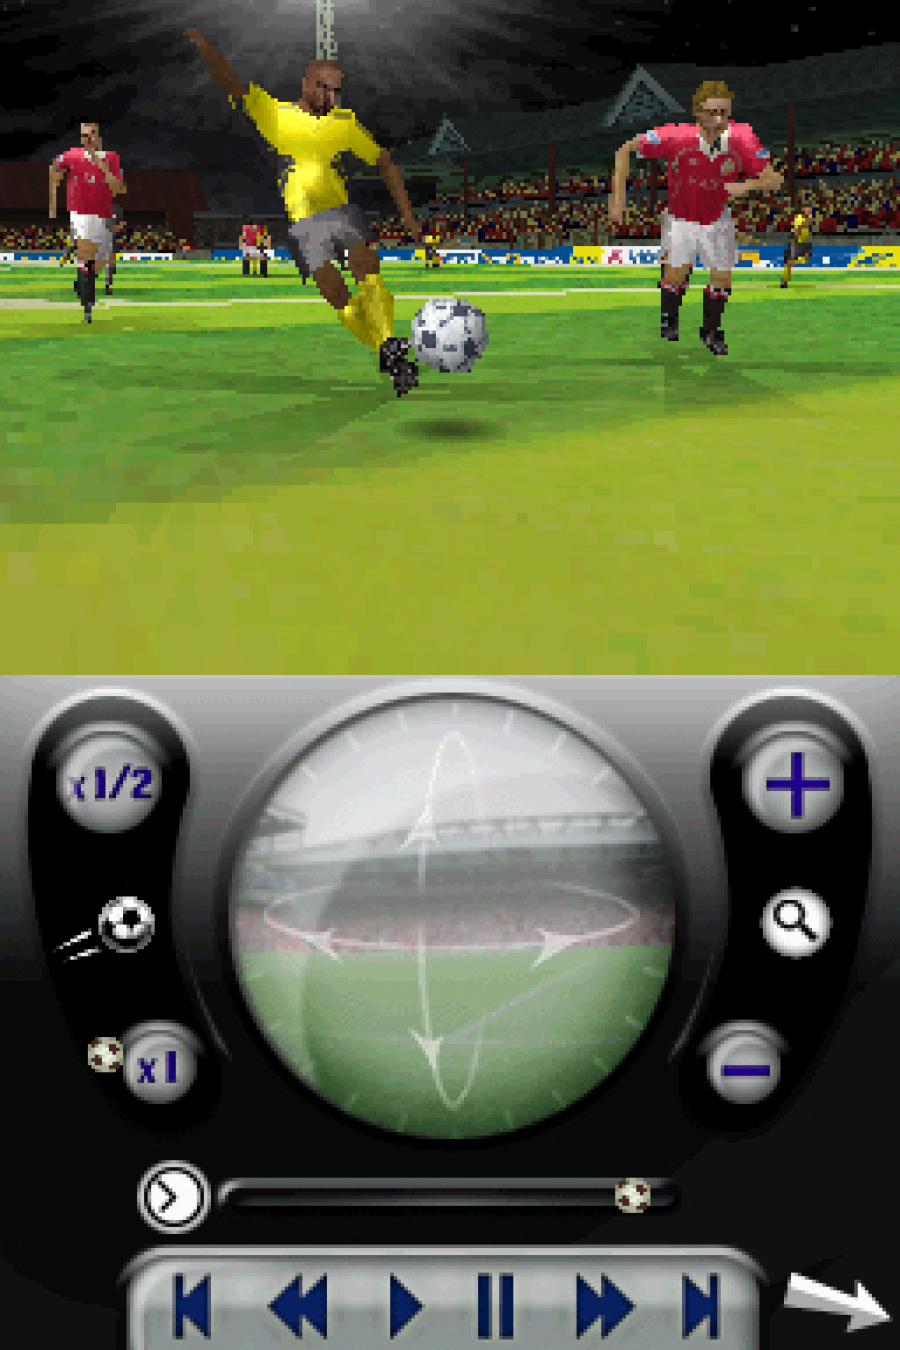 FIFA 07 Screenshot